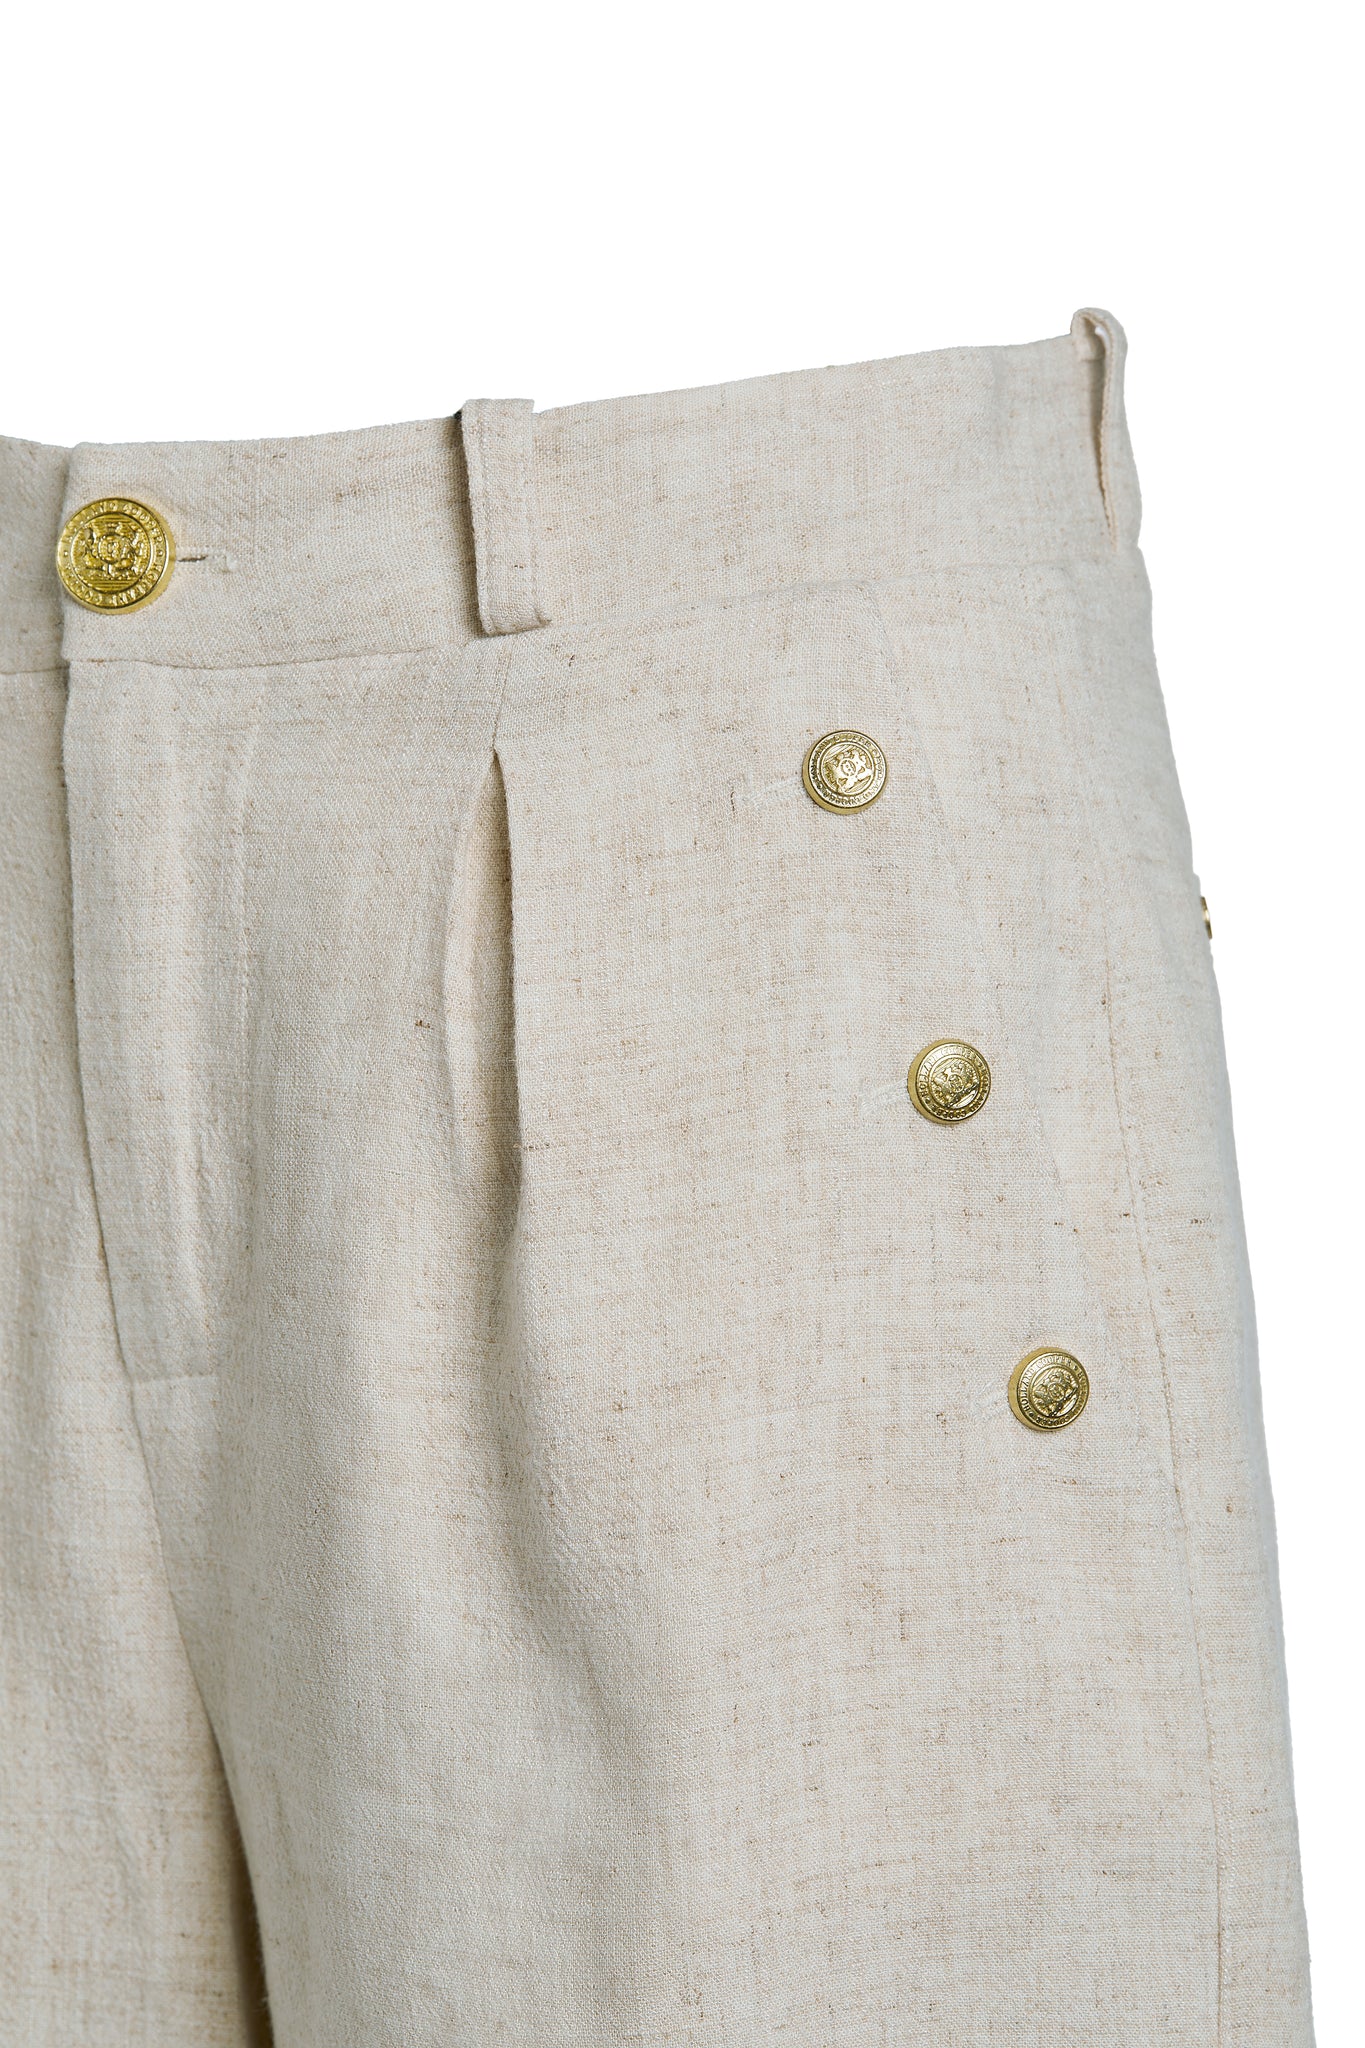 Belgravia Tailored Short (Natural Linen)